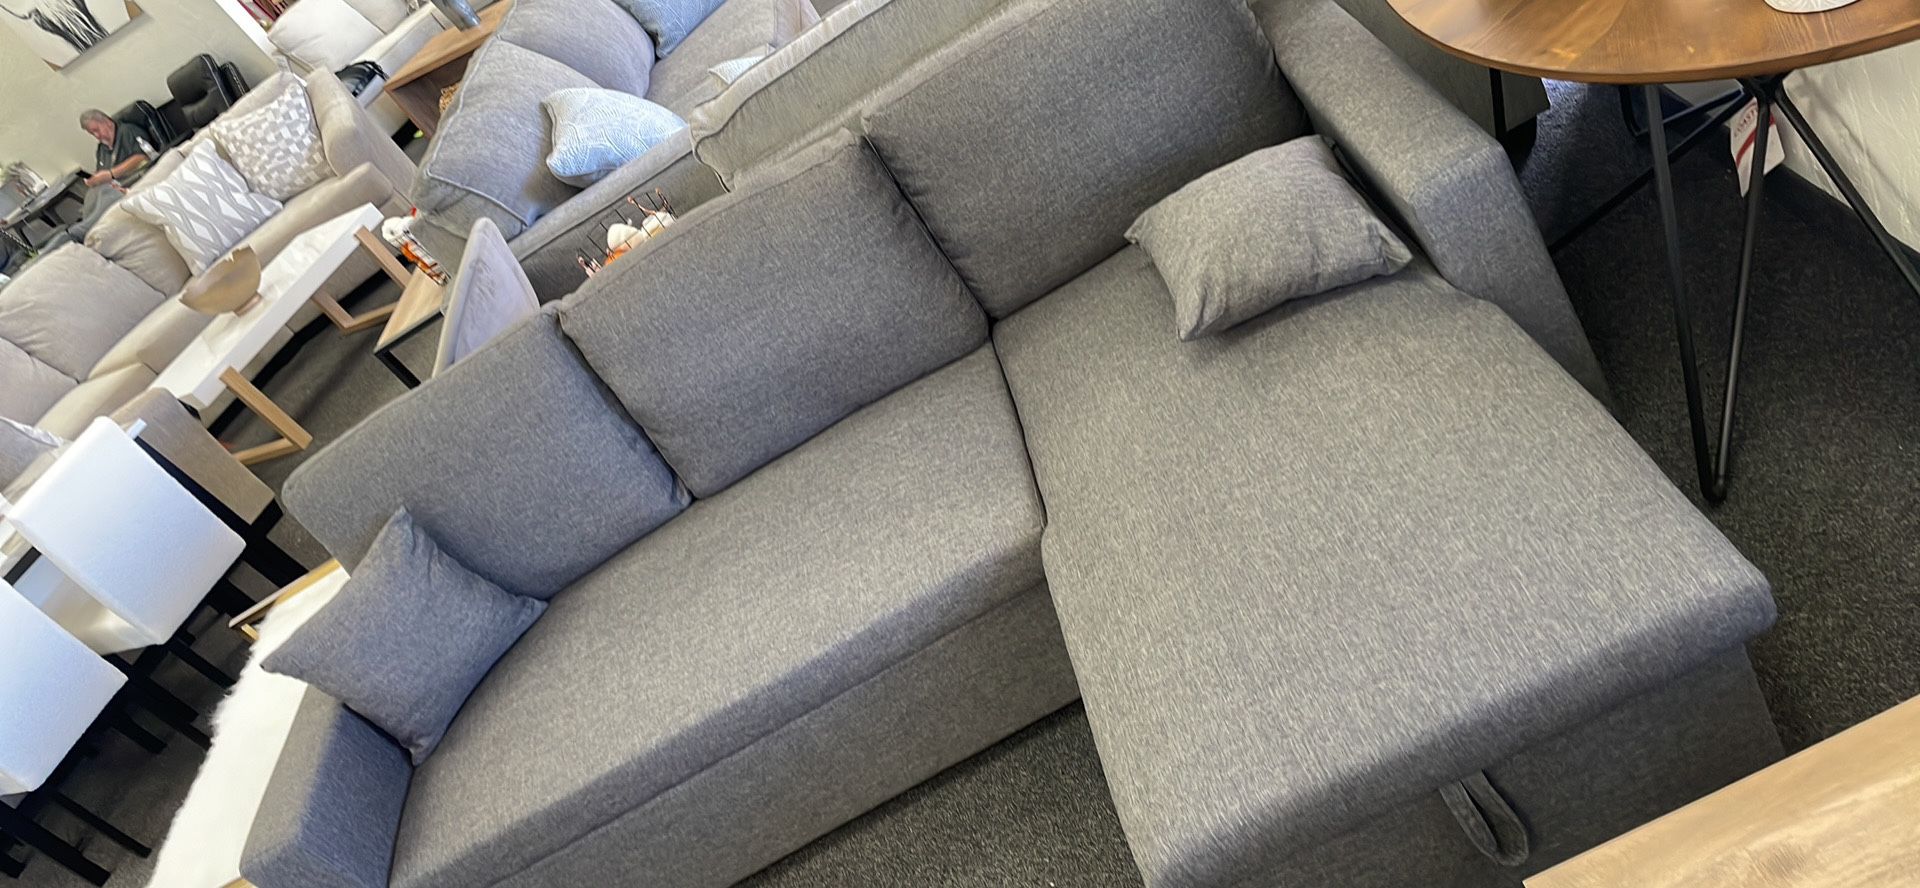 Sleeper Sofa With Storage 